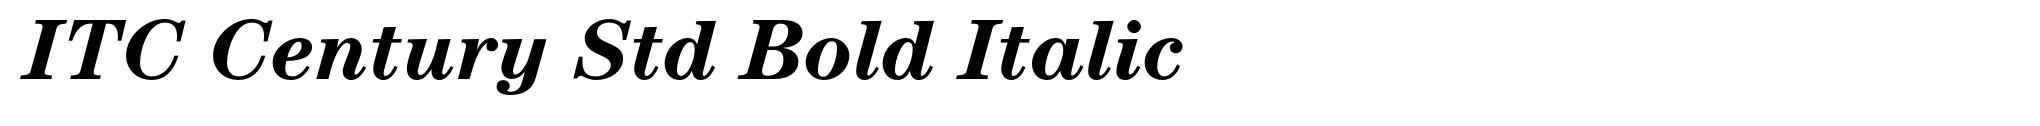 ITC Century Std Bold Italic image